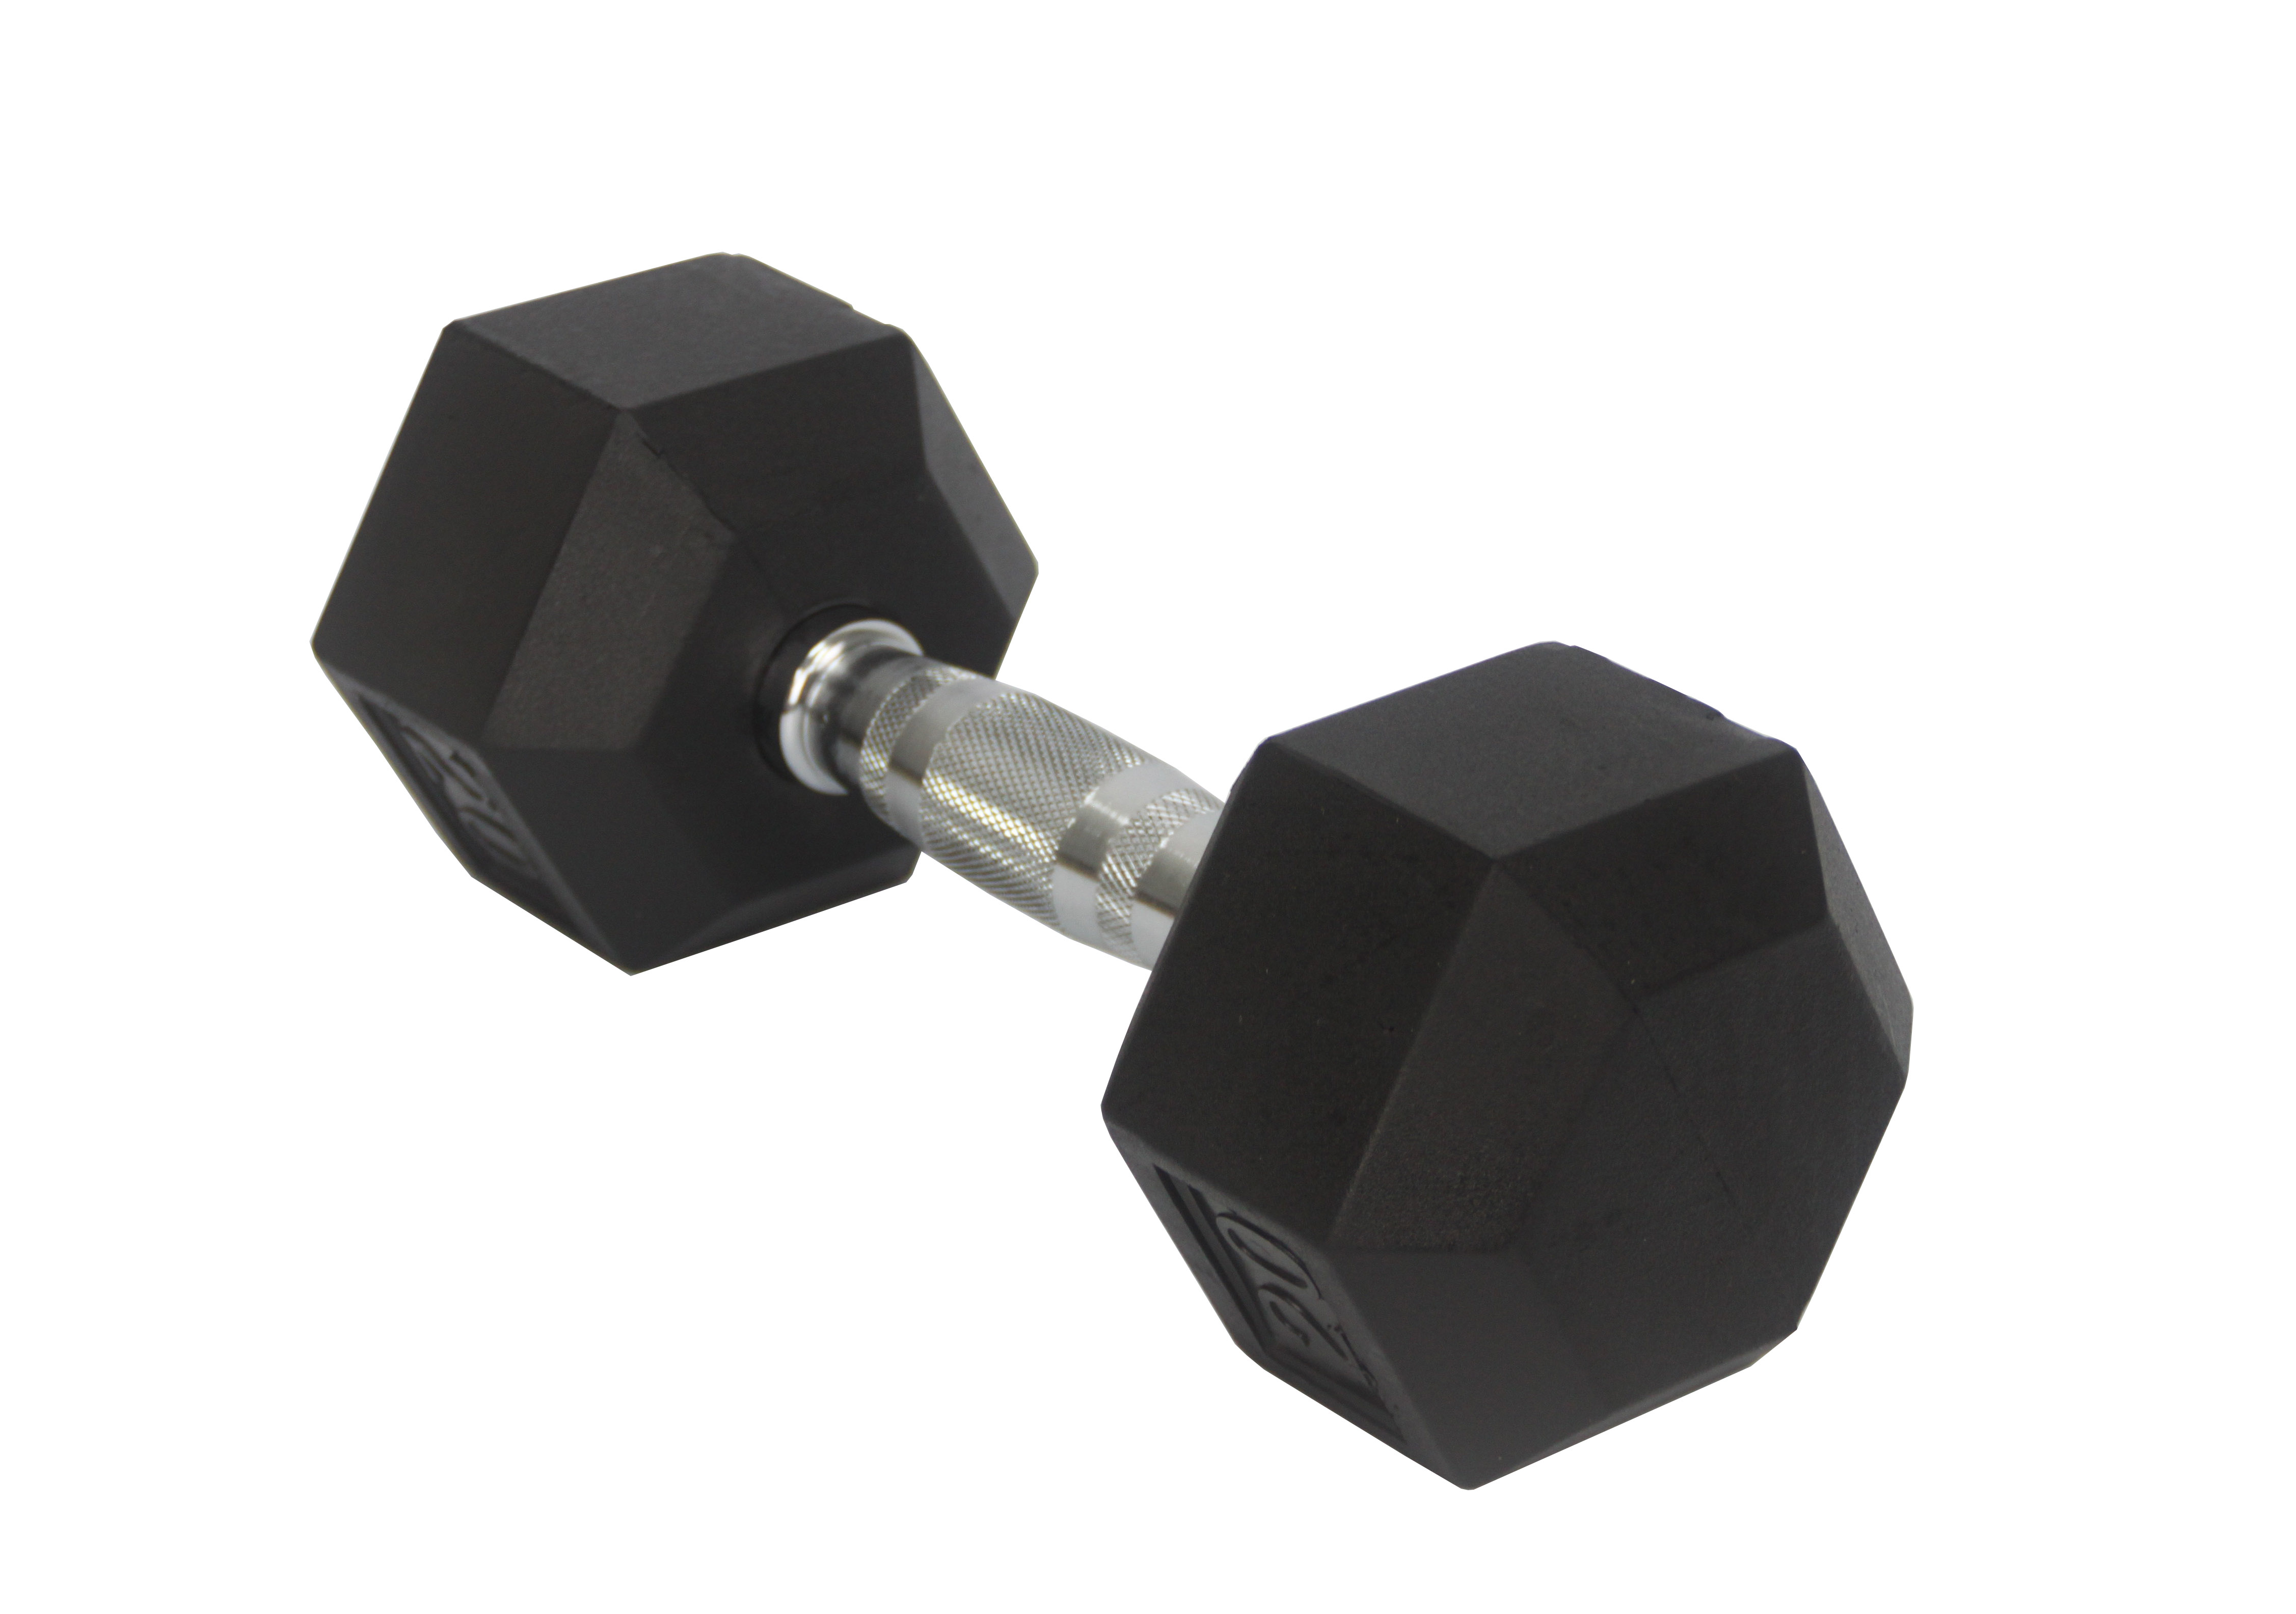 FixtureDisplays Rubber Dumbbell in Pair - with Metal Handles Pair of 2 20 lbs Dumbell 15189